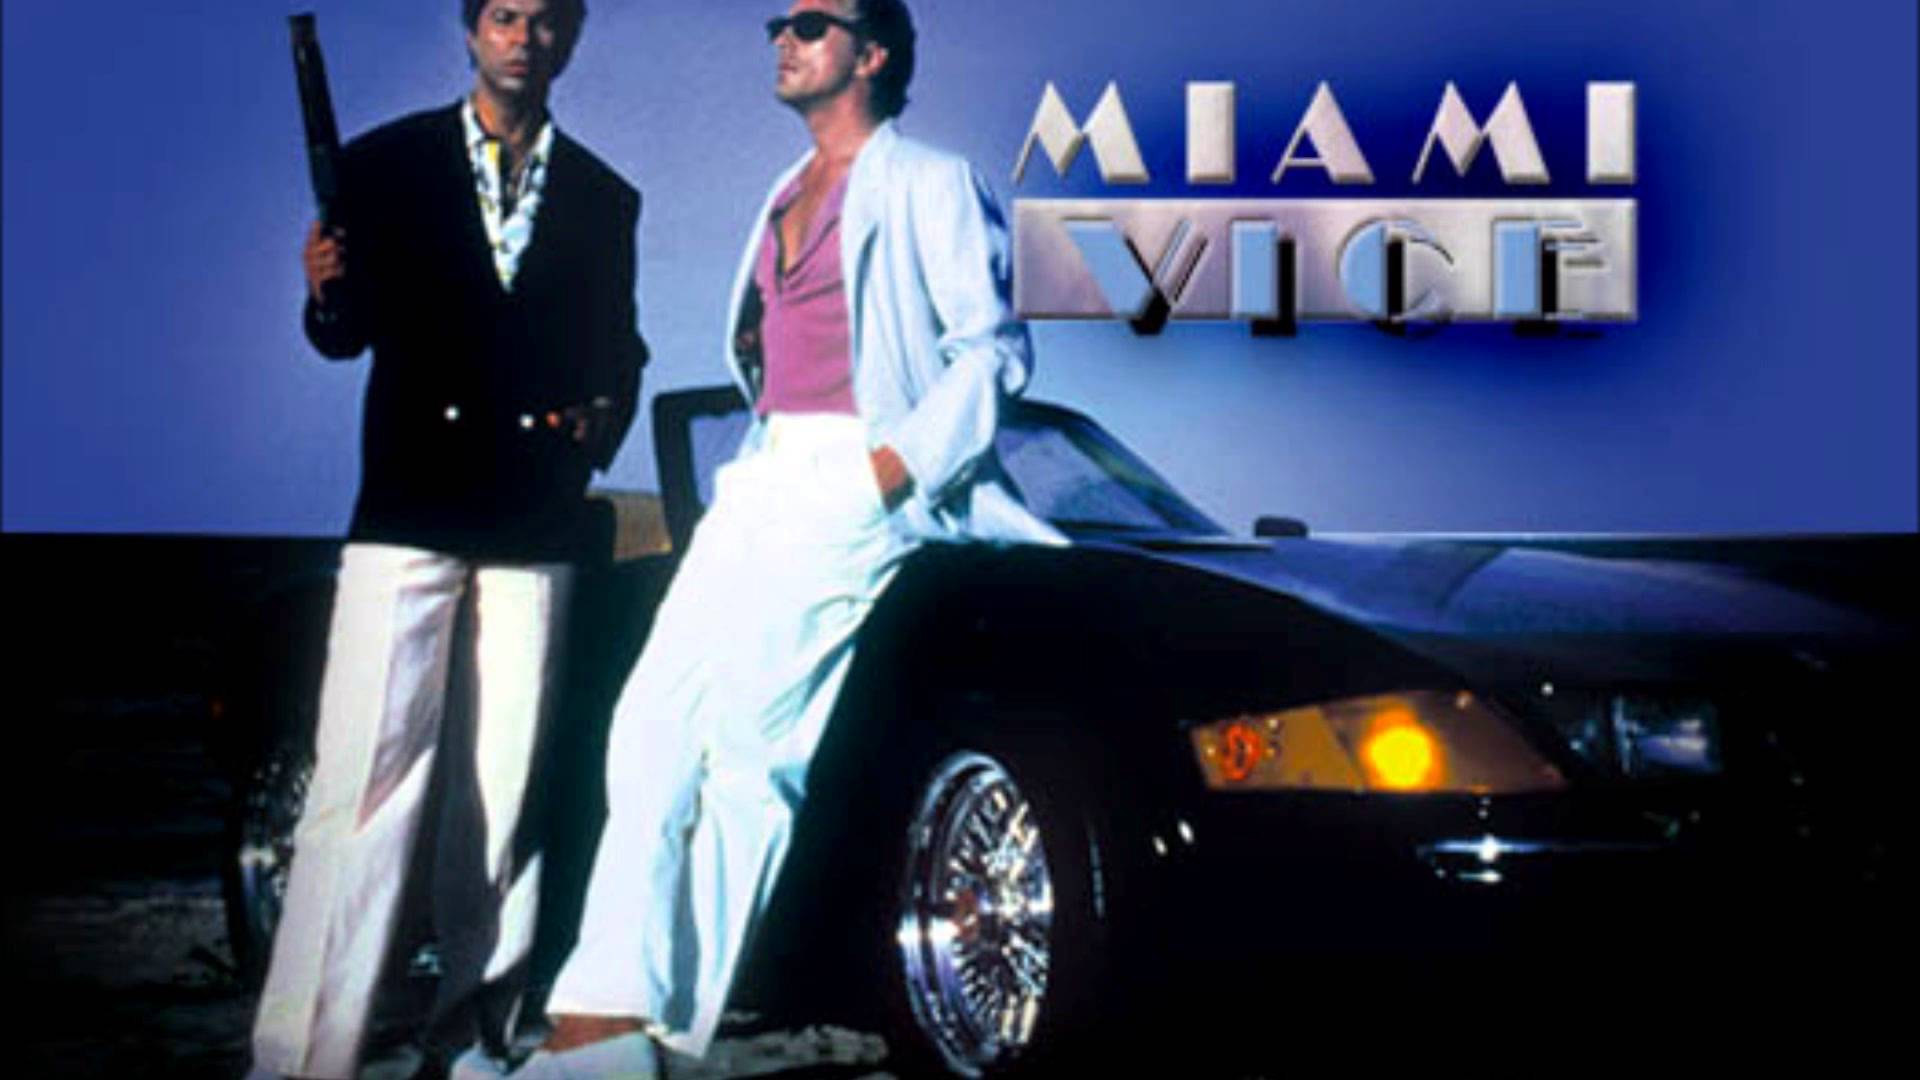 Miami Vice Wallpaper Pixshark Image Galleries